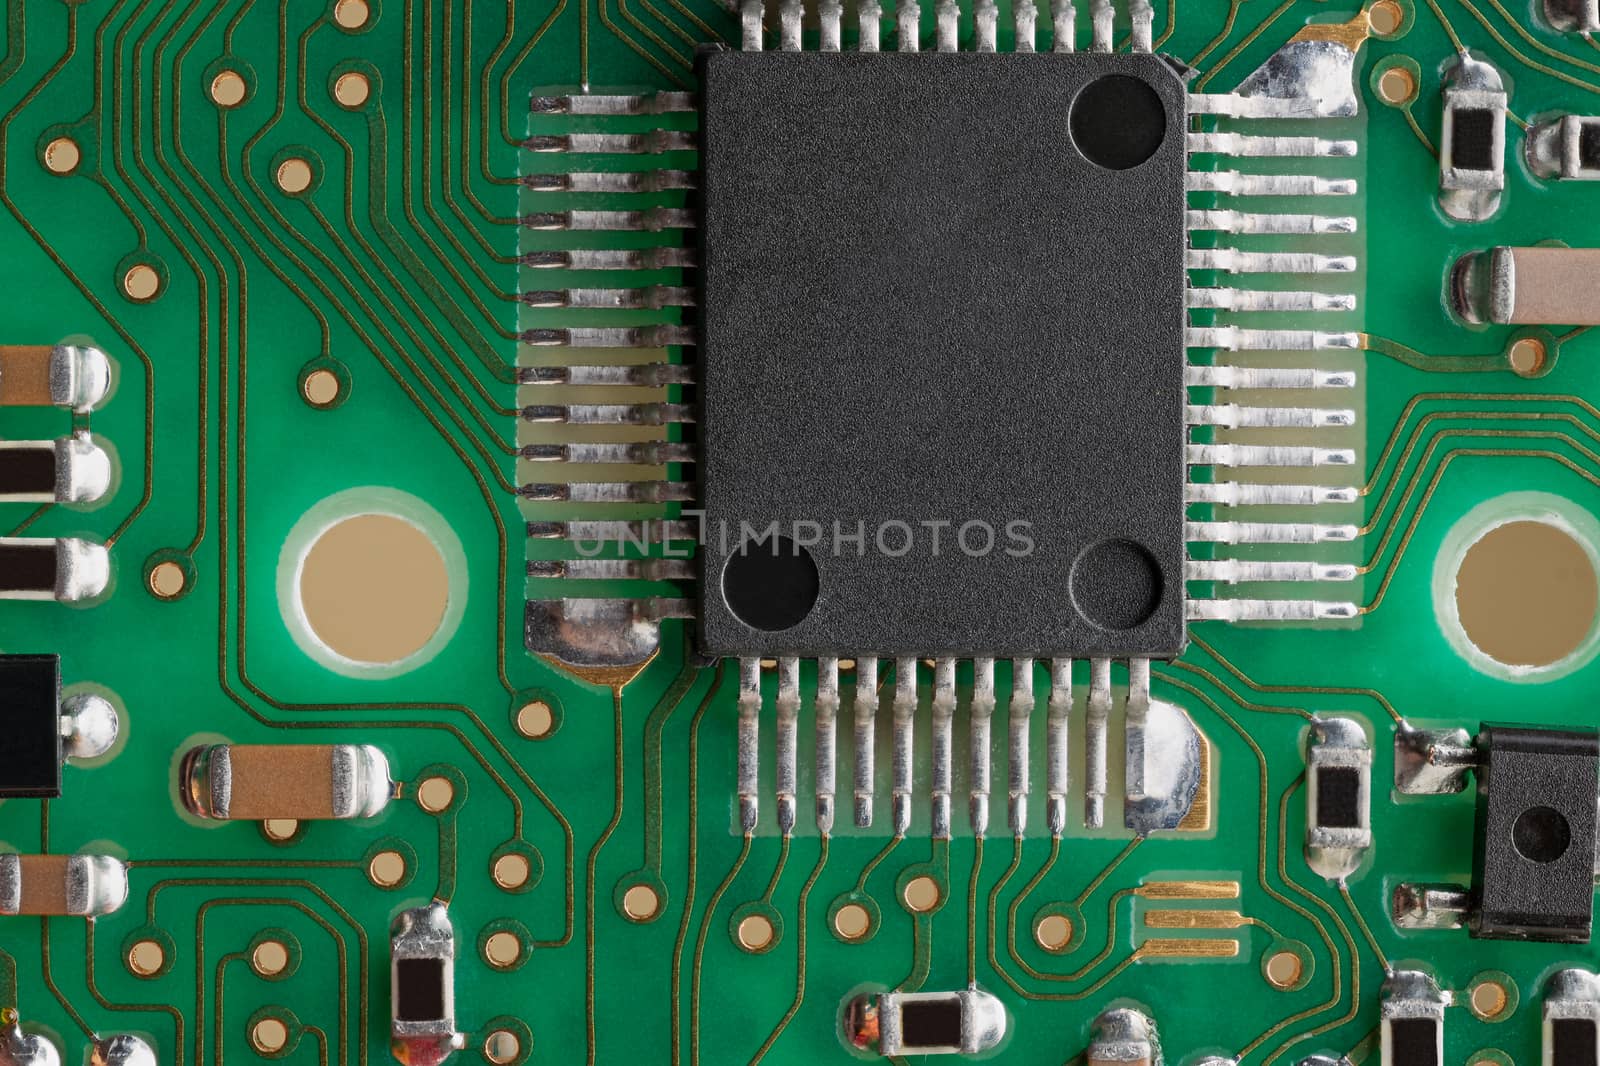 PCB board supermacro close-up. Many capacitors, resistors on board. Digital engineering photo. Flash microprocessor on photo. 